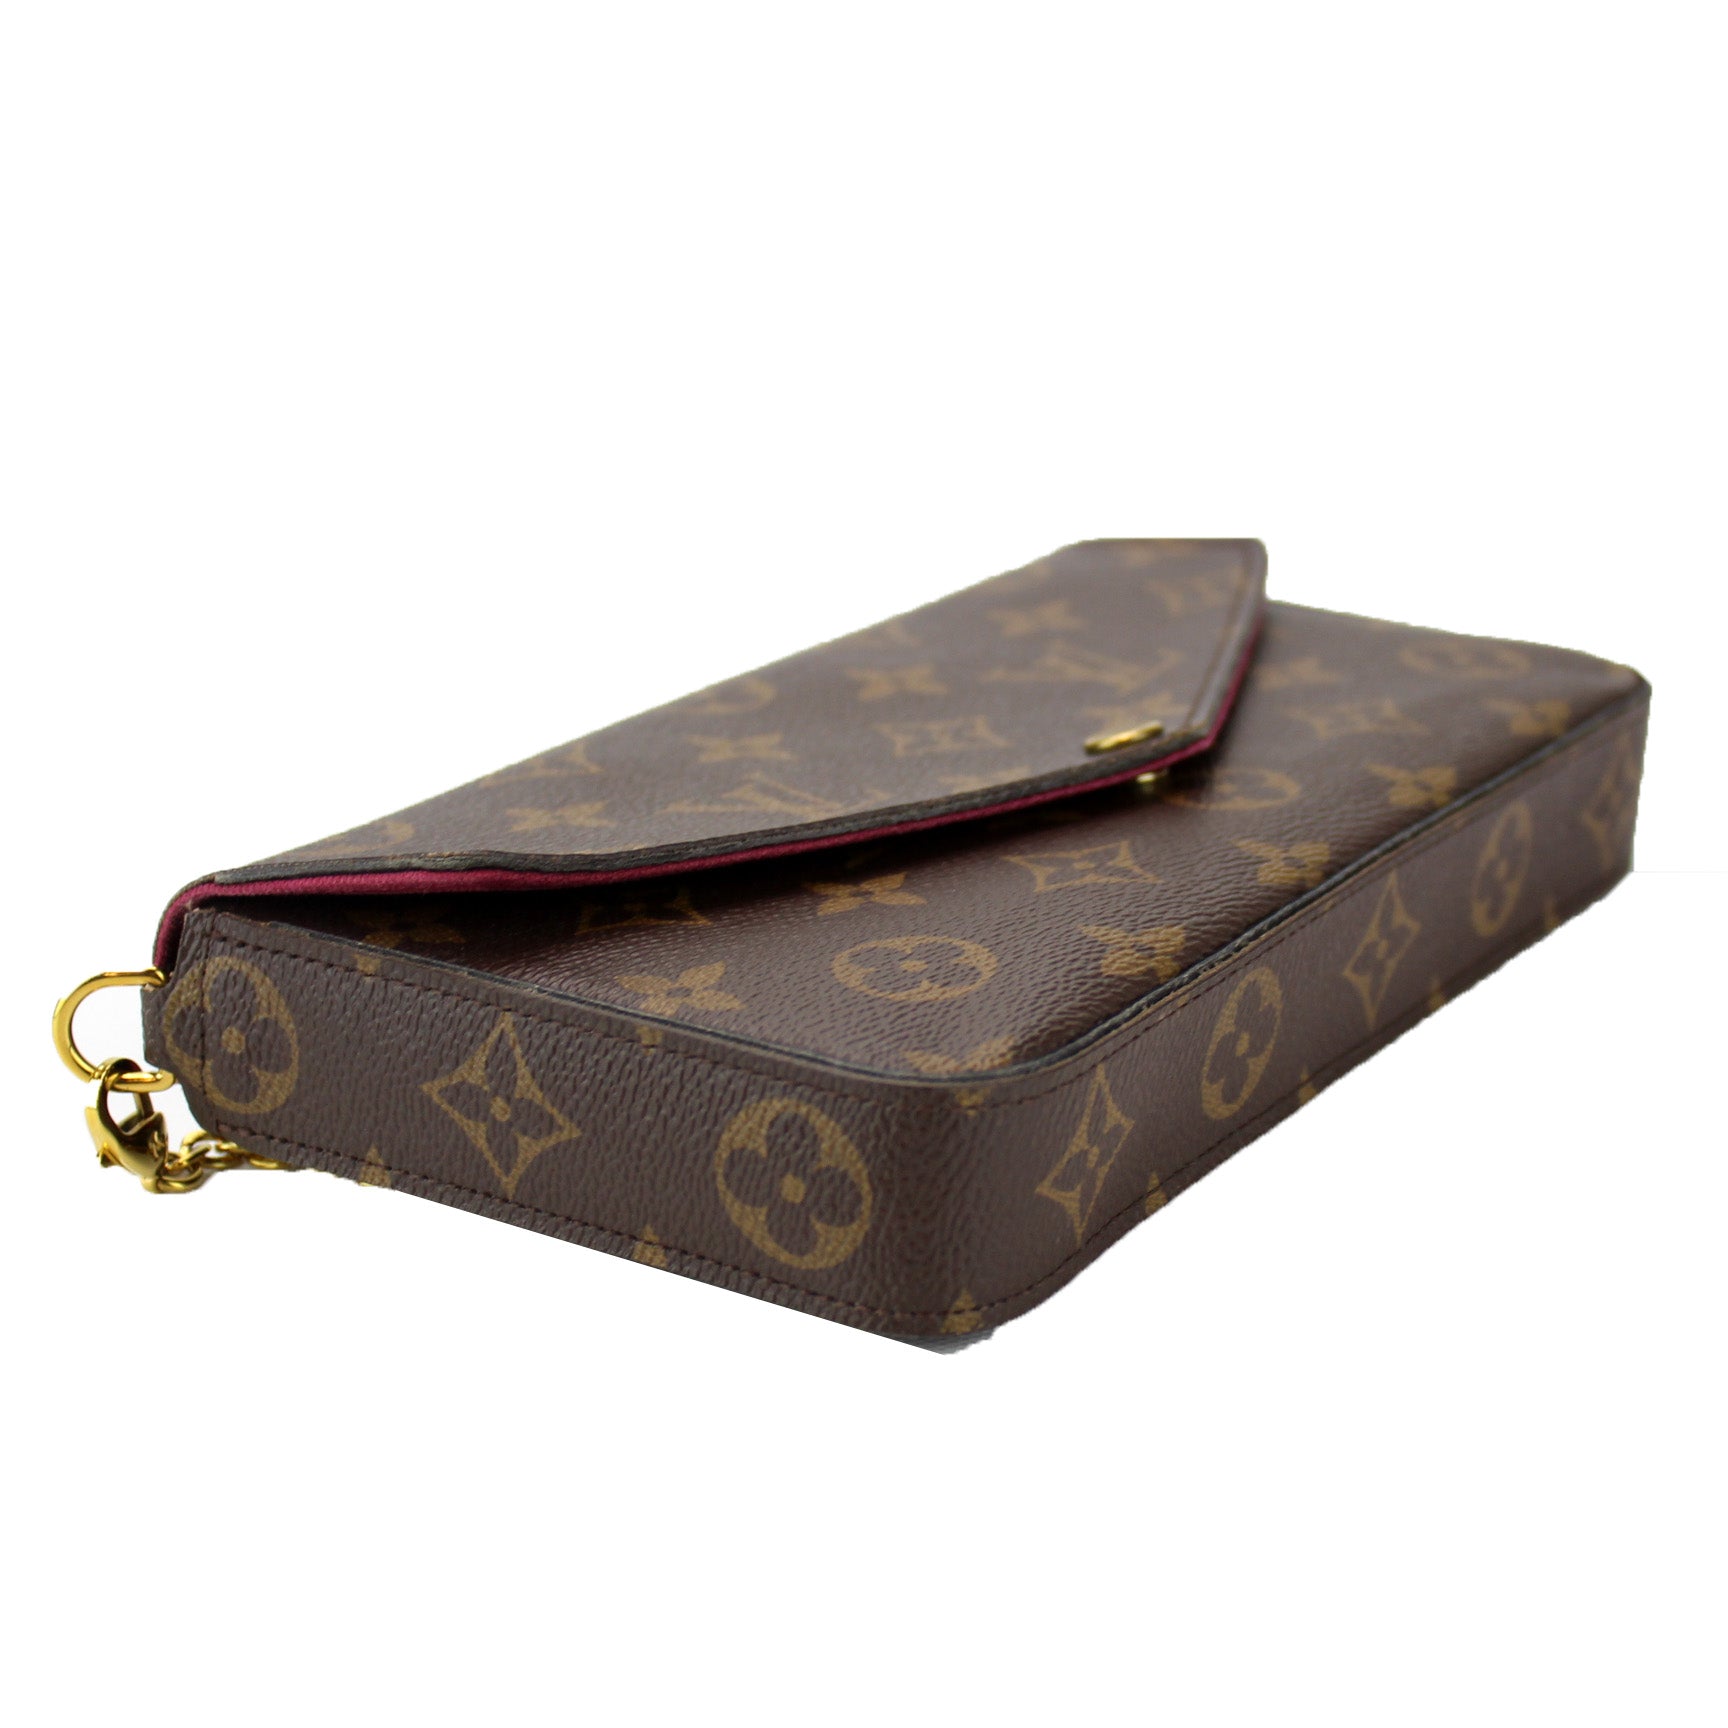 Pochette Felicie Monogram – Keeks Designer Handbags